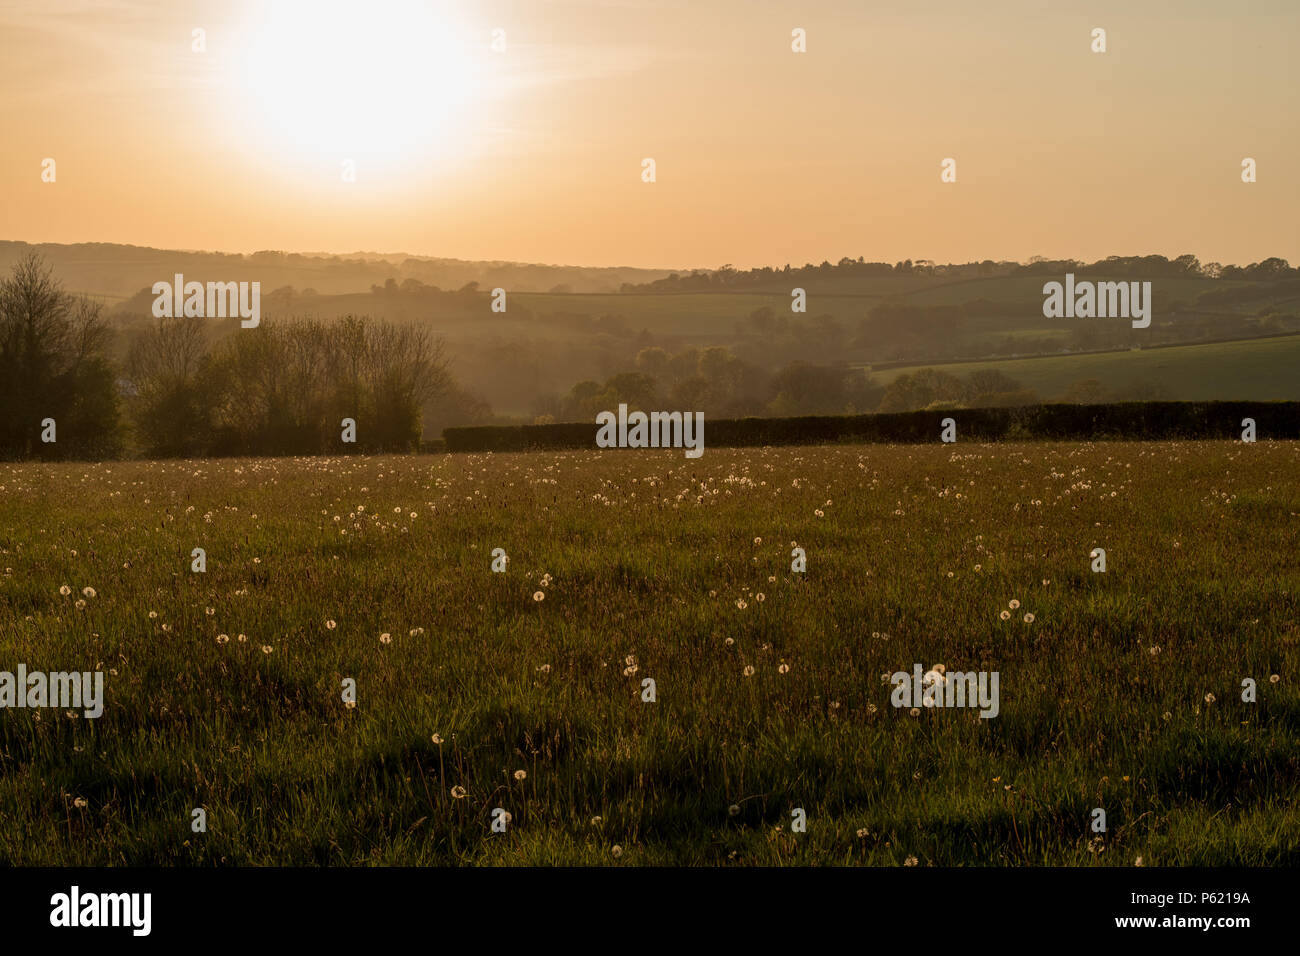 The setting sun providing diffused golden light over a field full of dandelion clocks Stock Photo